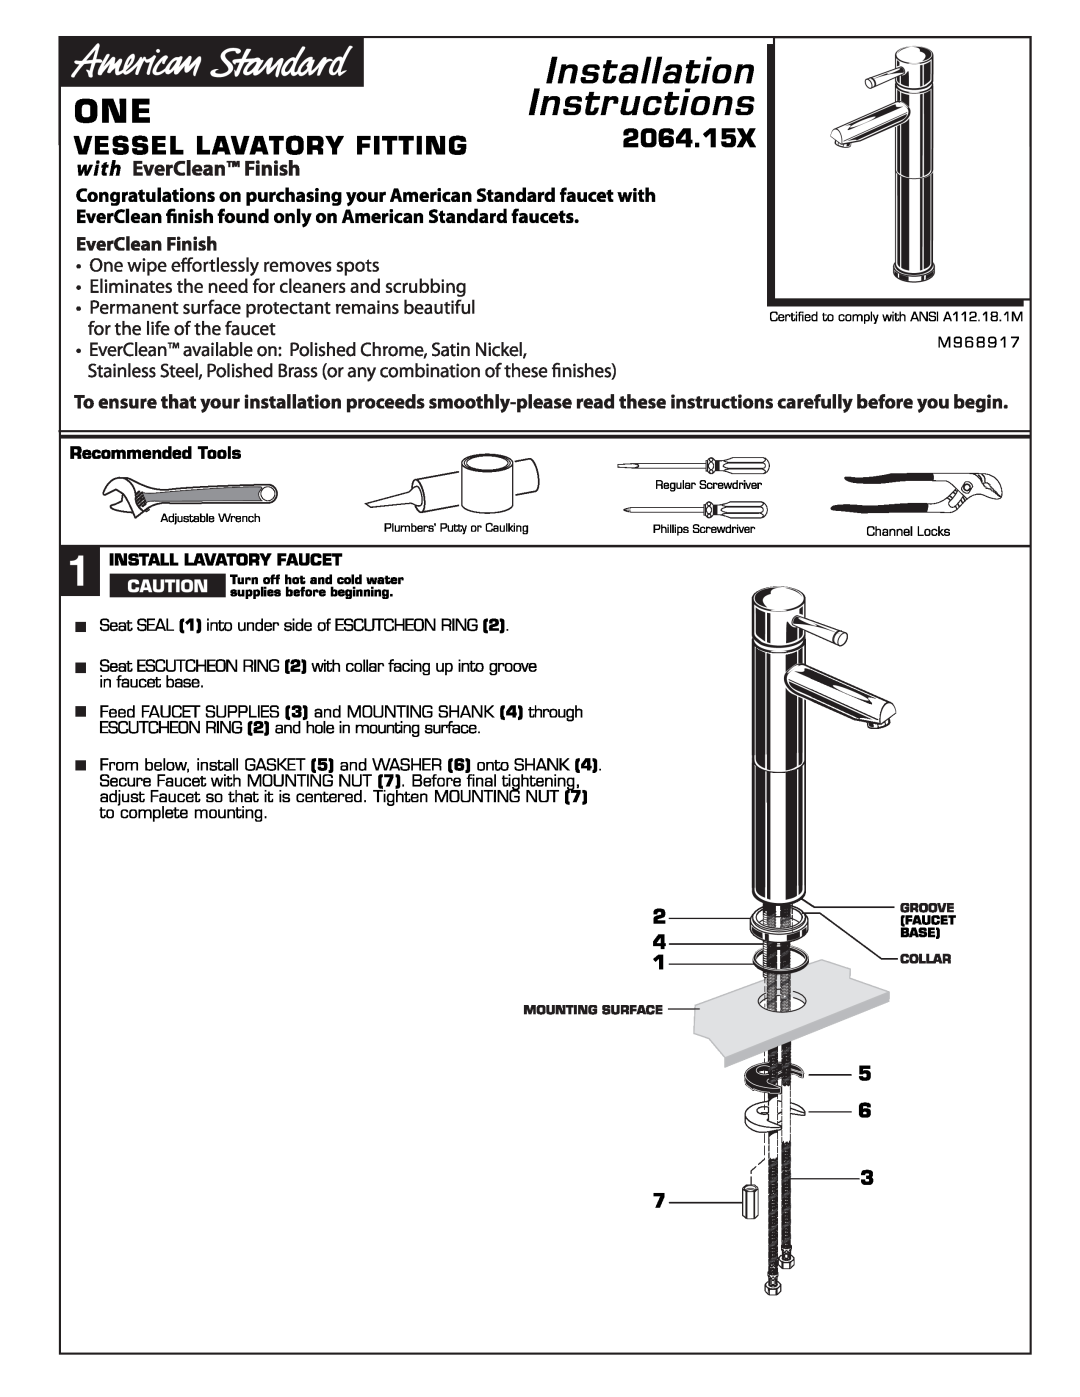 American Standard 2064.15X manual 